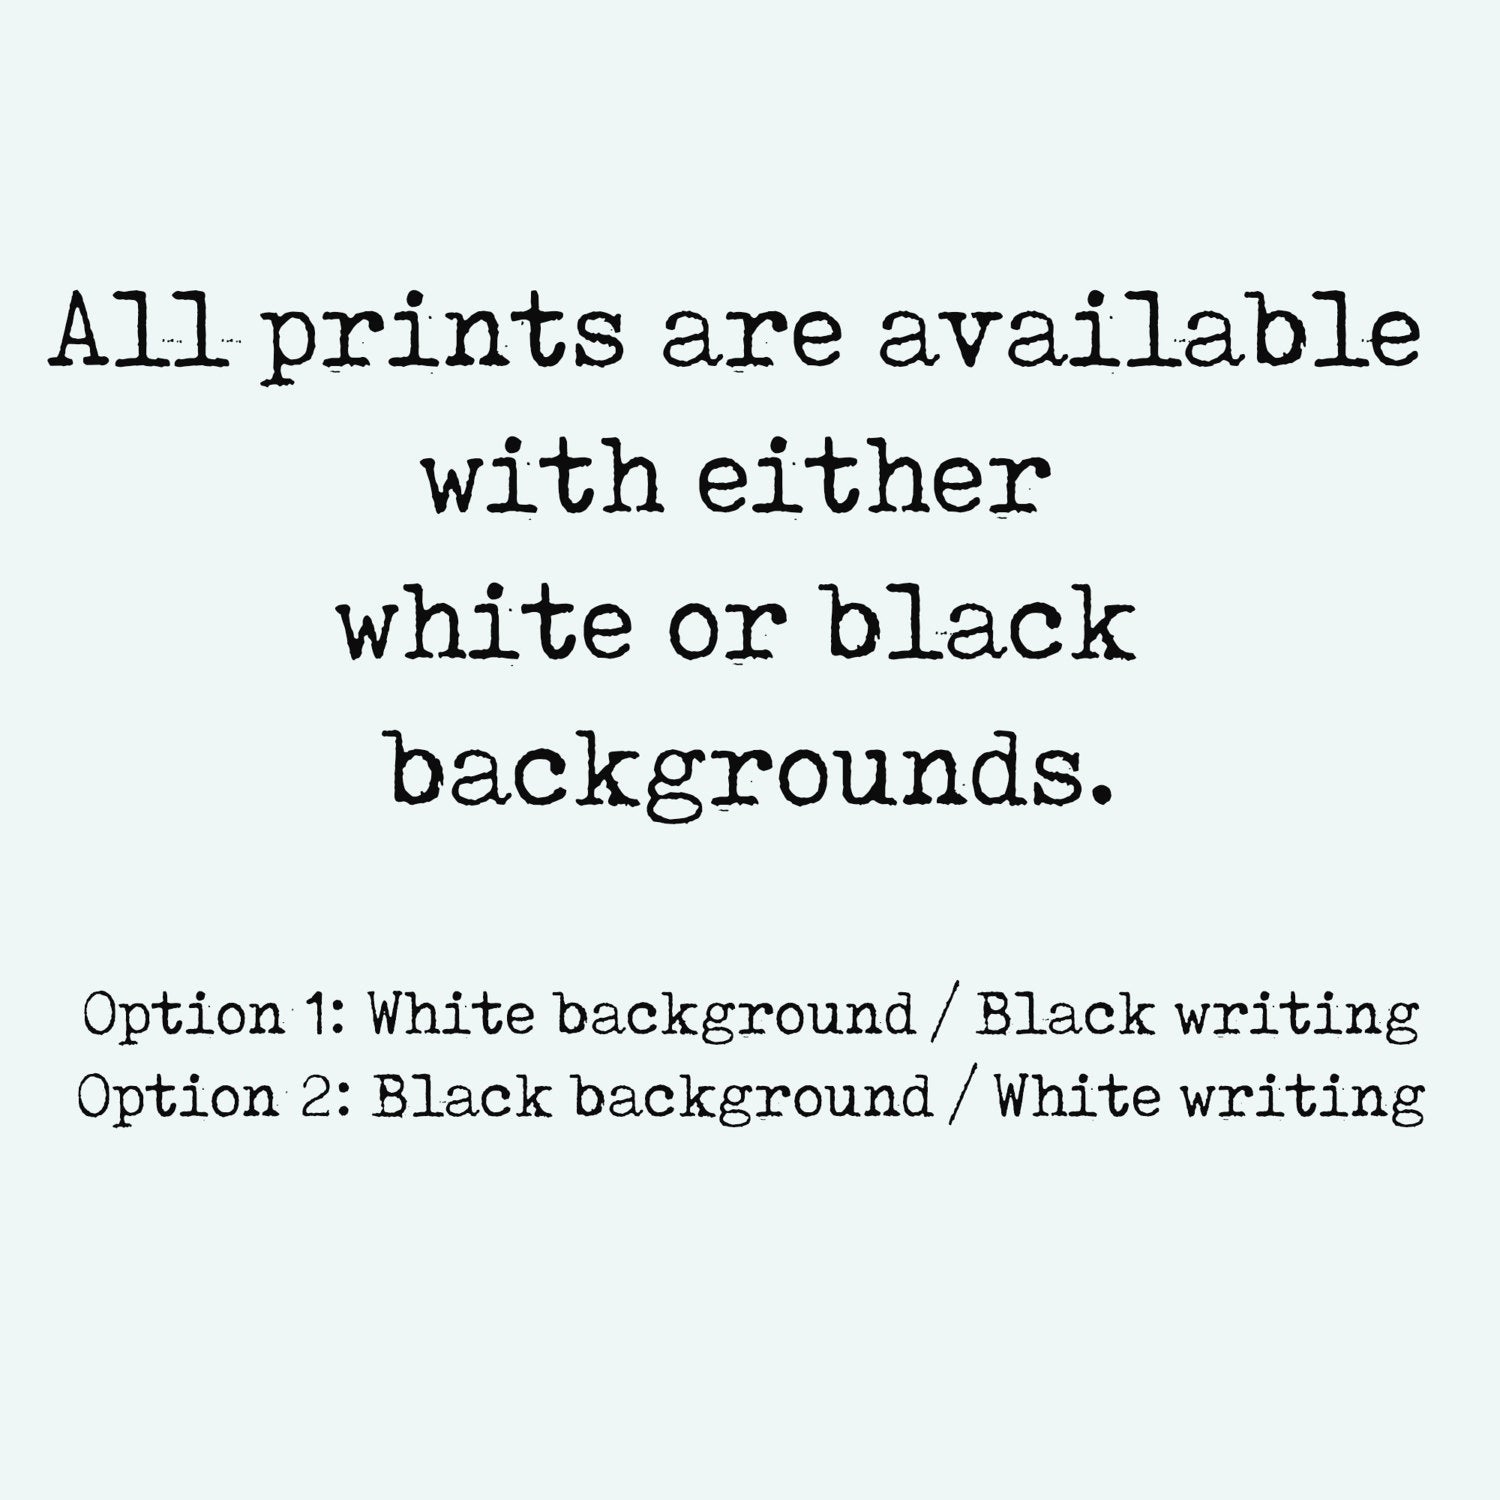 The Velveteen Rabbit Quote Print, Nursery Decor, Black and White, Kids Room Decor, Nursery Art, Margery Williams, Childrens Book Unframed - BookQuoteDecor